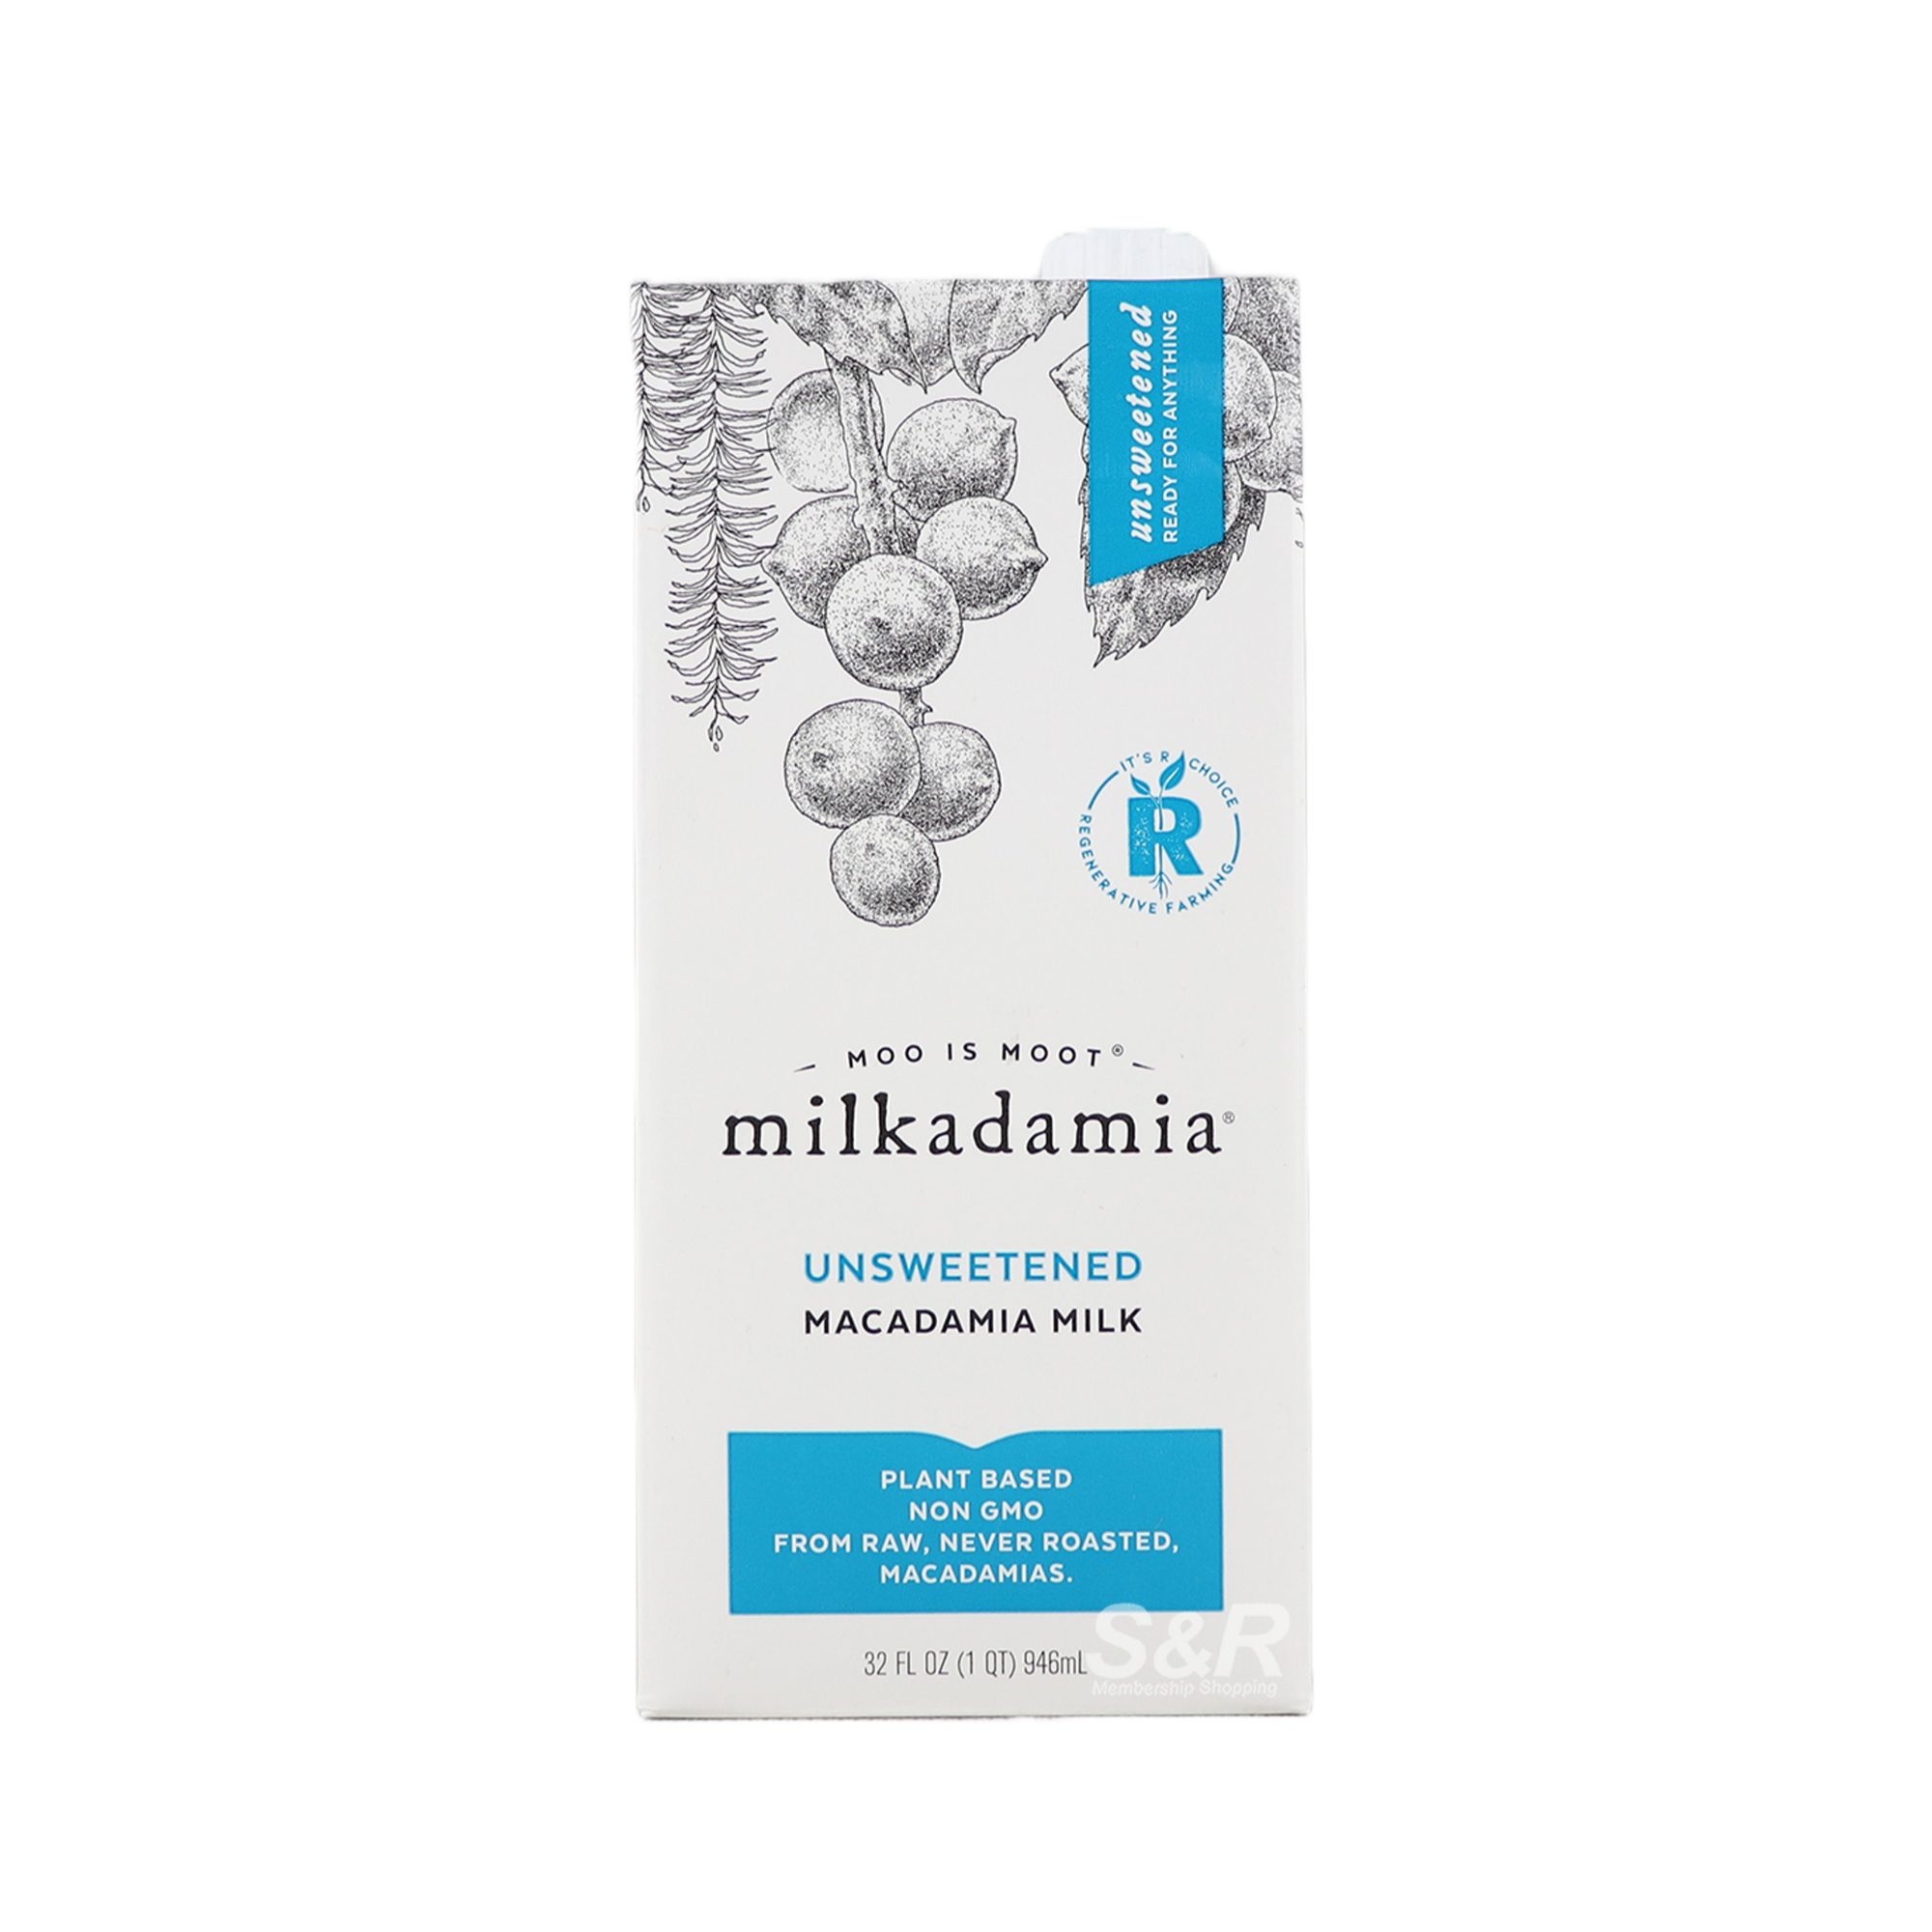 Milkadamia Unsweetened Macadamia Milk 946mL